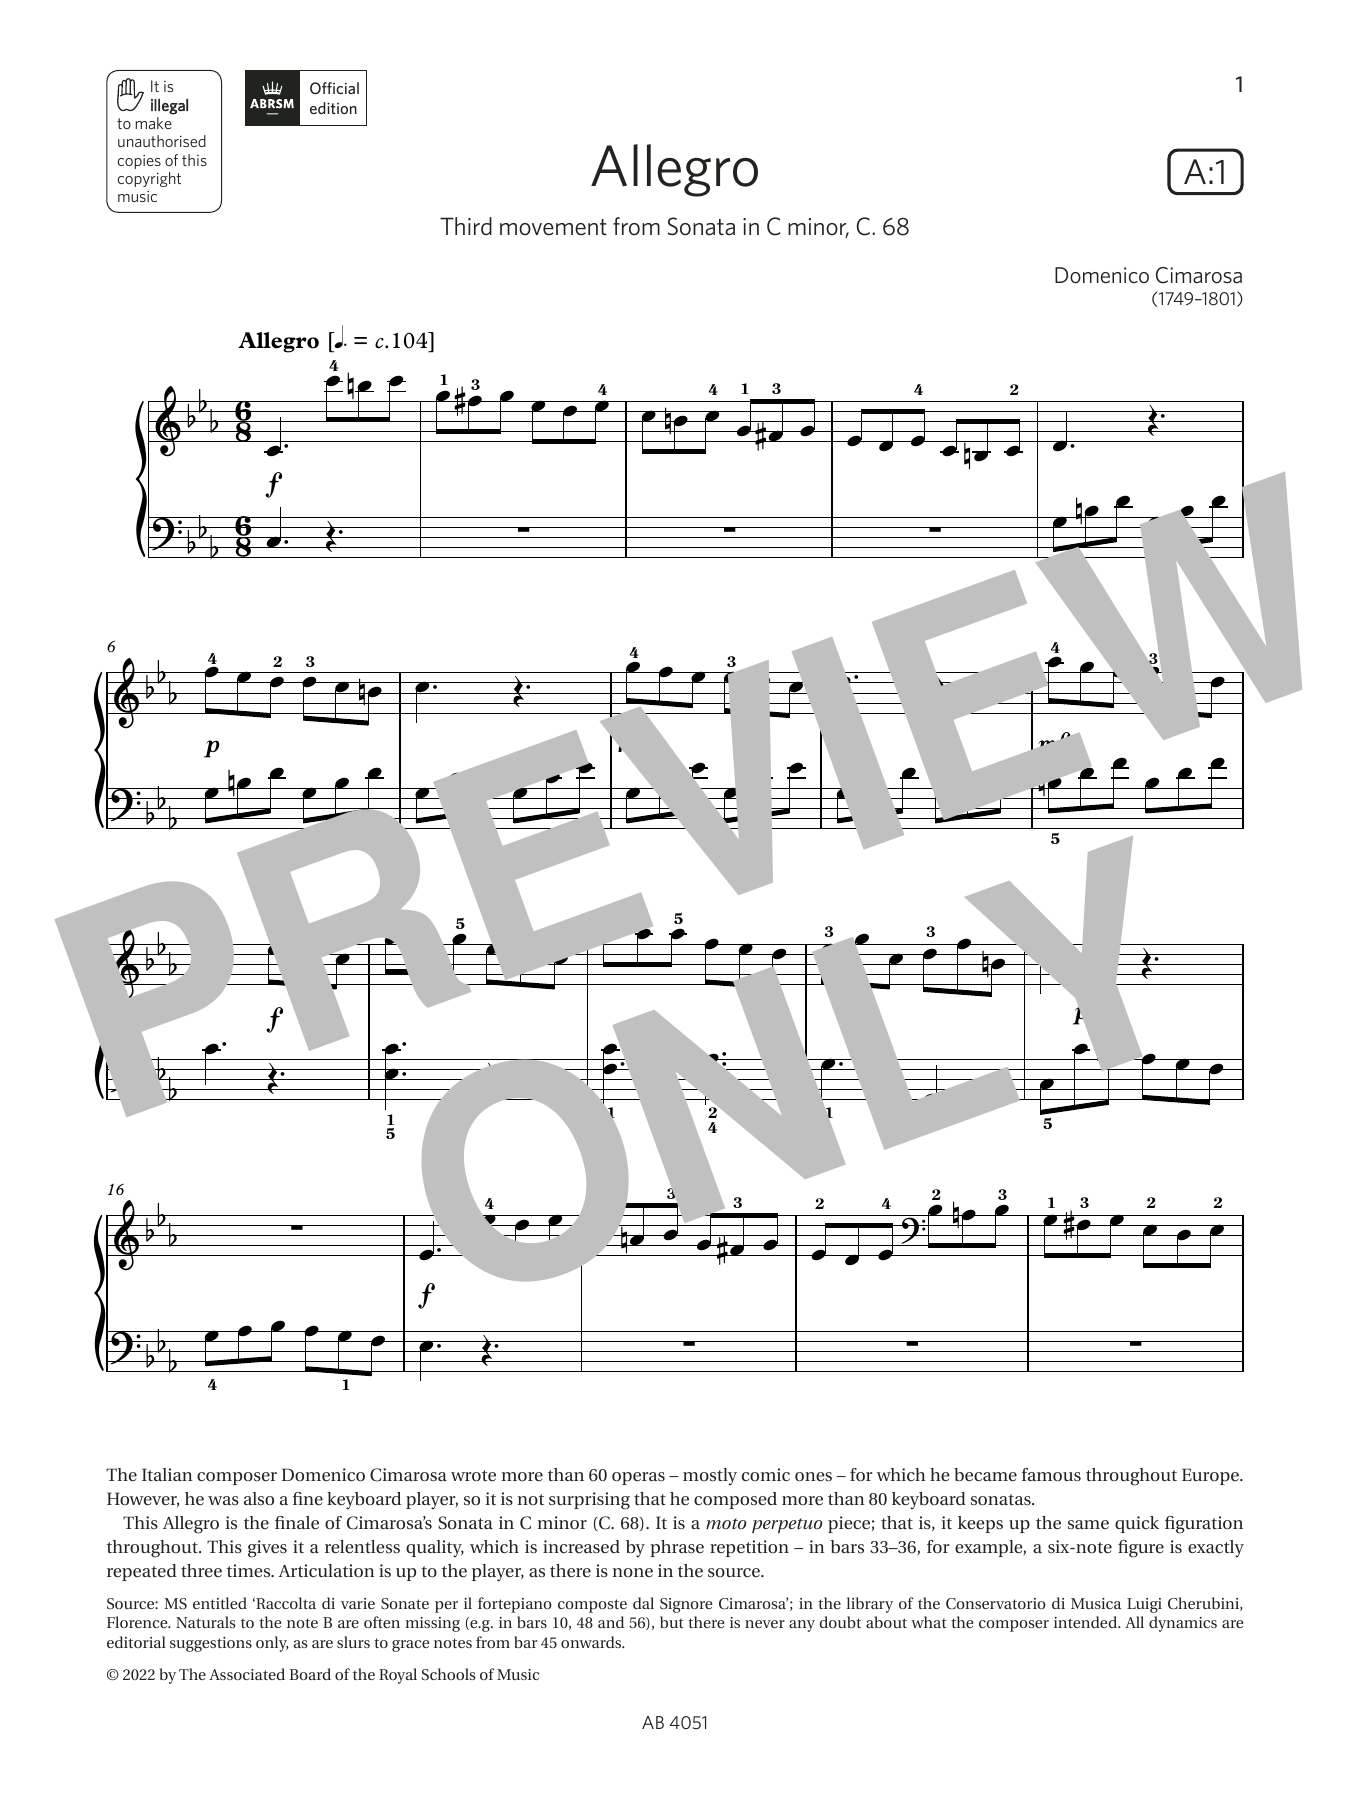 Domenico Cimarosa Allegro  Grade 5  List A1  From The Abrsm Piano Syllabus 2023   2024  Sheetmusic Thumbnail 